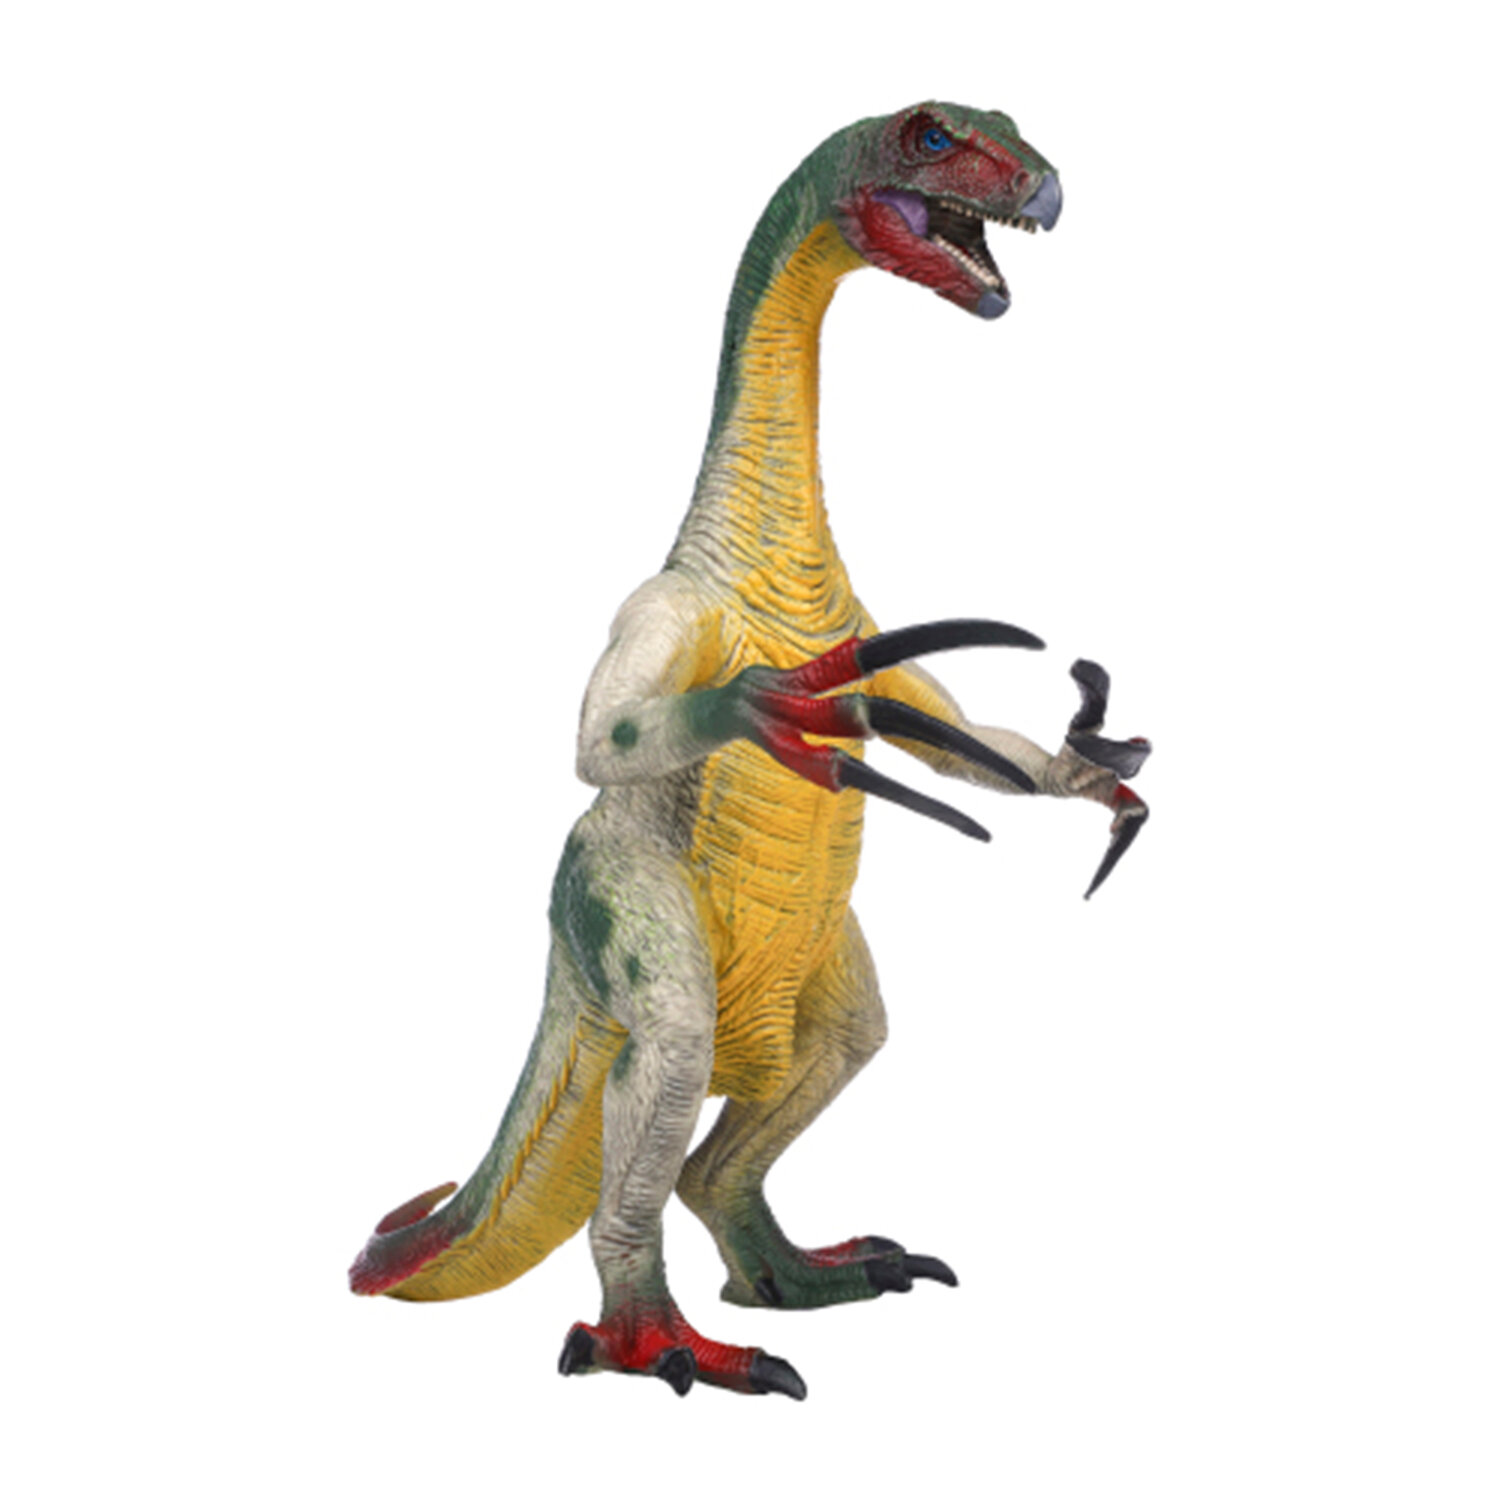 Игрушка динозавр серии "Мир динозавров" - Фигурка Теризинозавр